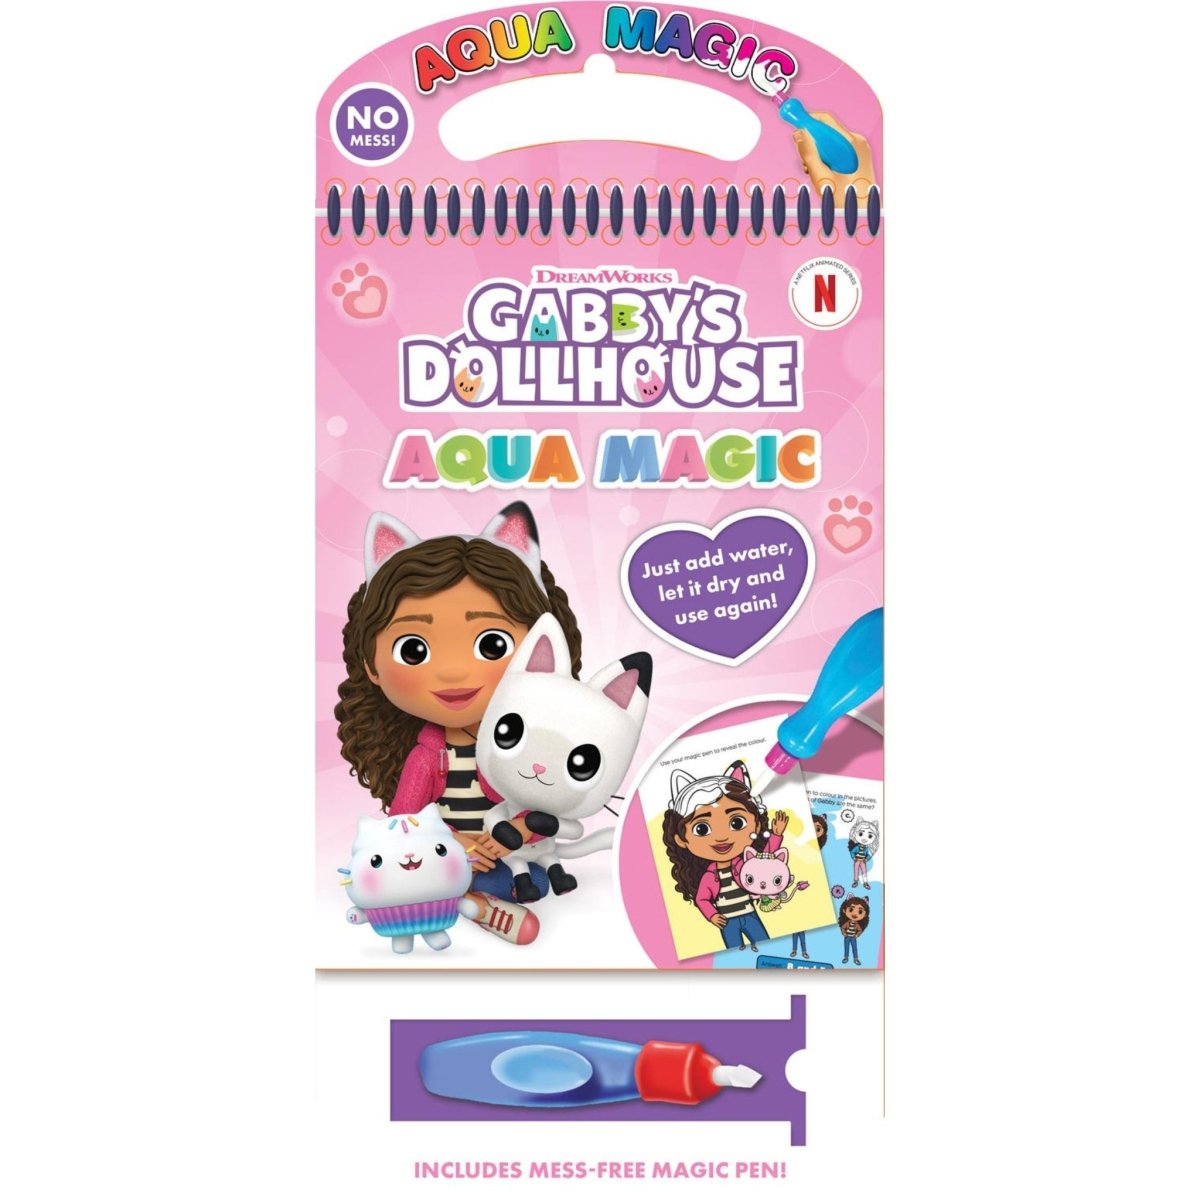 Gabby's Dollhouse Aqua Magic - Kids Party Craft